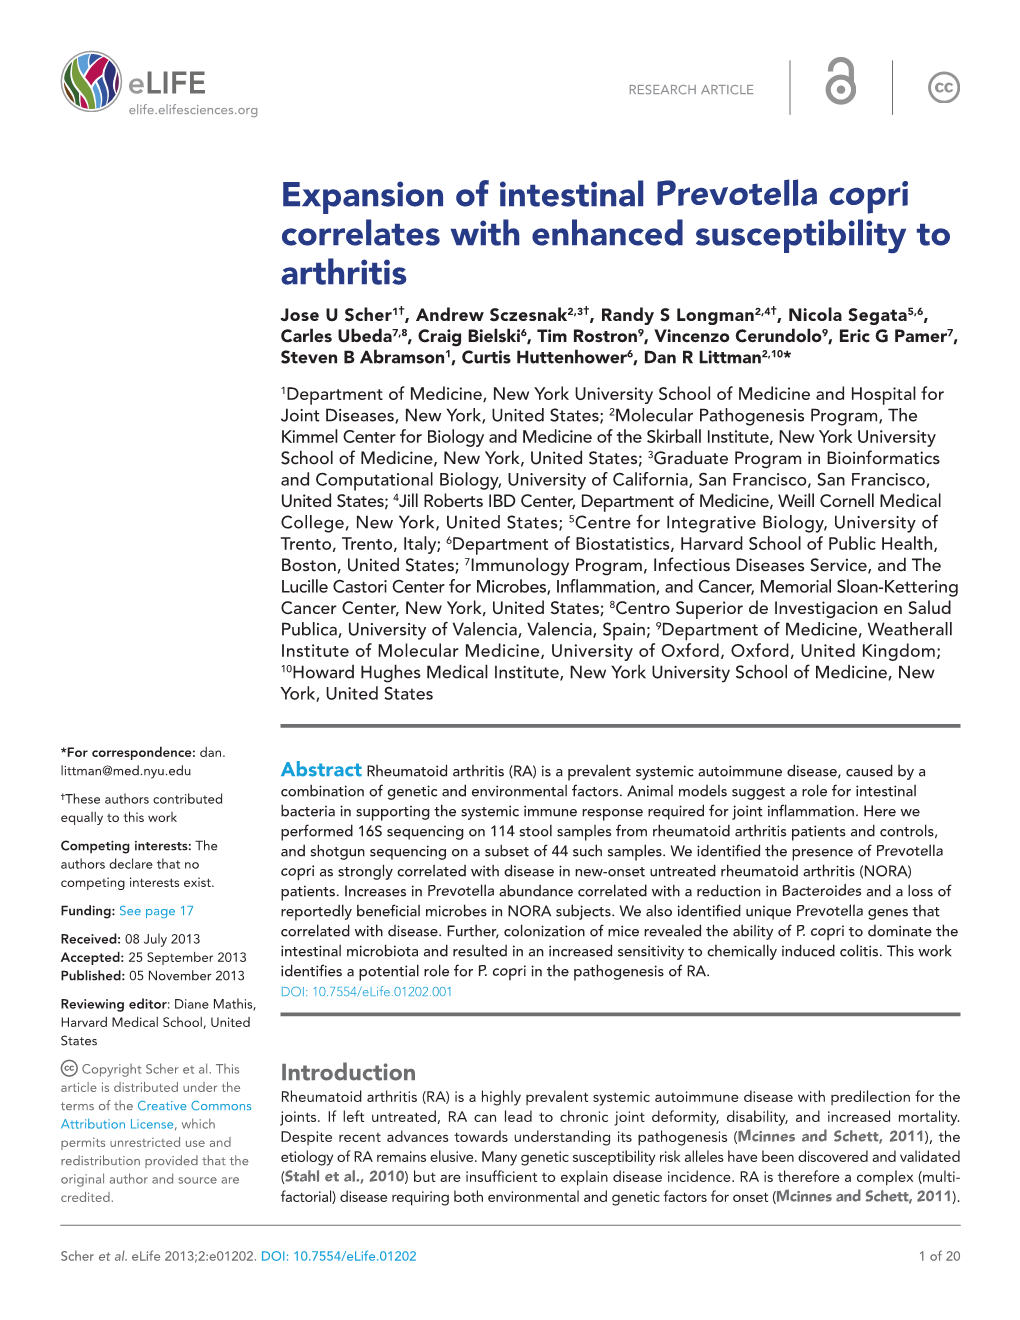 Expansion of Intestinal Prevotella Copri Correlates with Enhanced